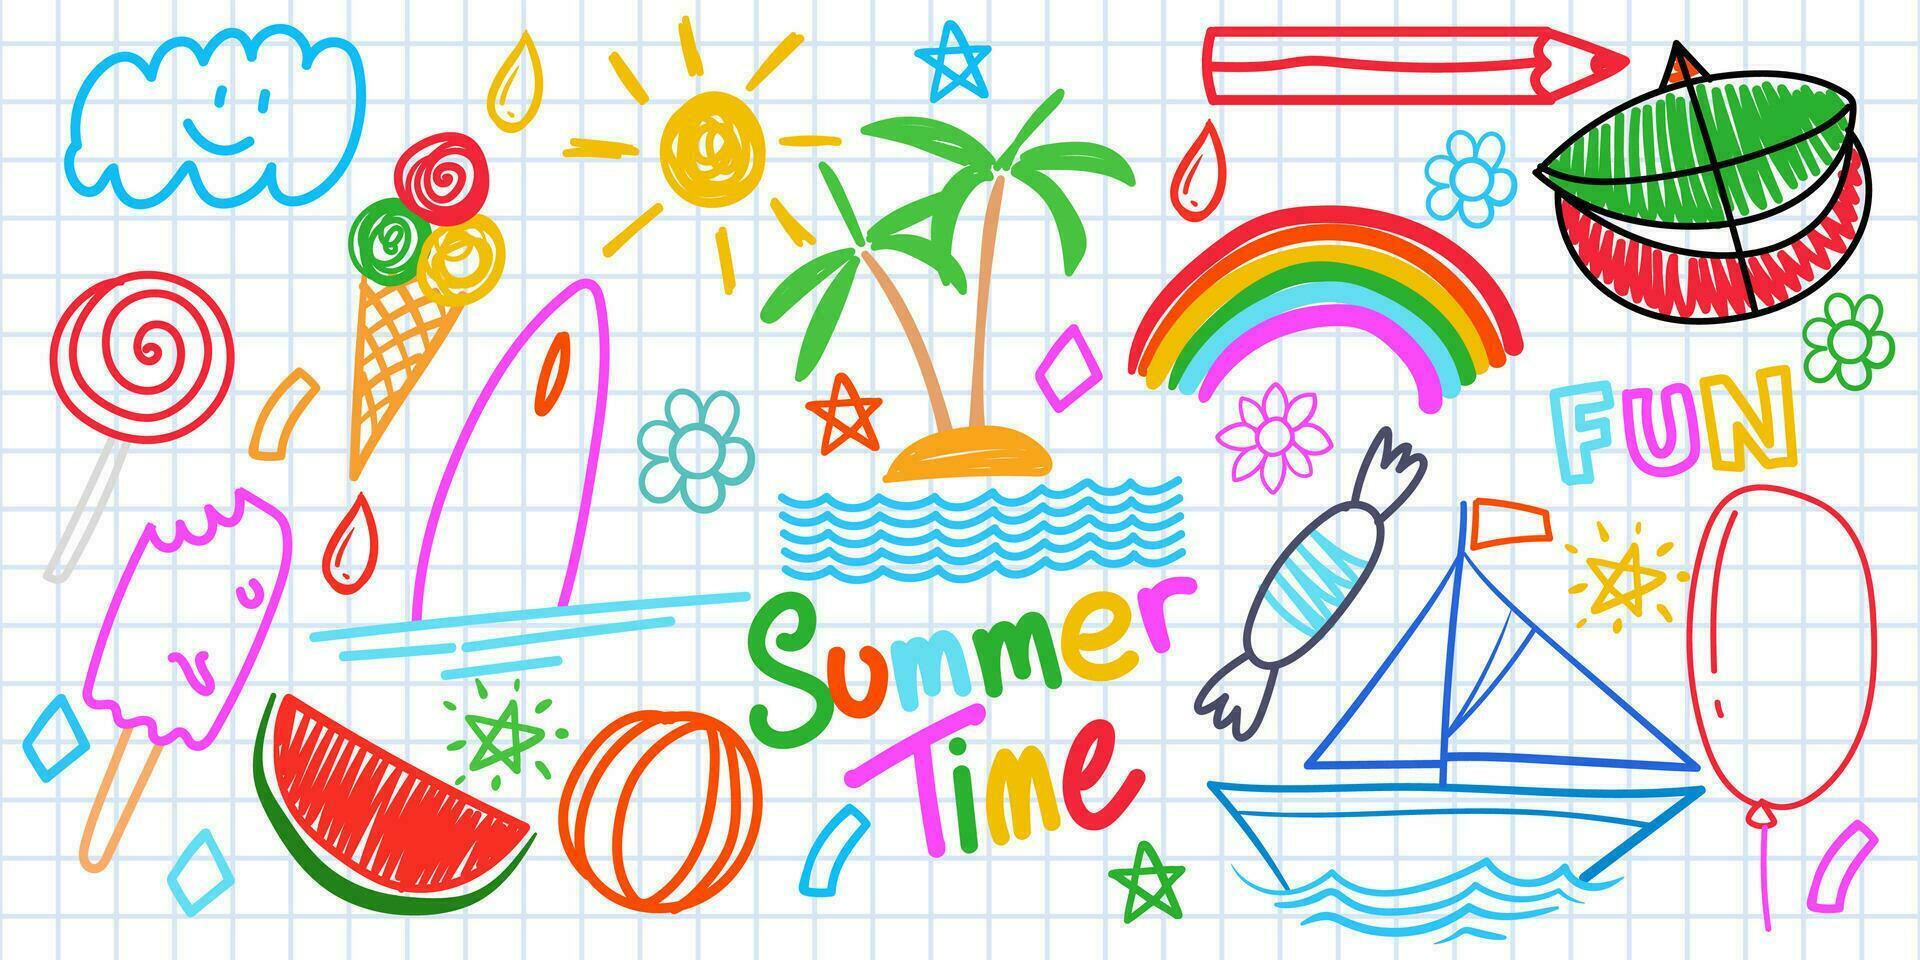 Summer funny hand drawn symbols vector set. Fruits, ice cream, sun, kite. Like kids colorful crayon, pastel, chalk or pencil stroke. Doodle cartoon art. Hello outdoor happy time